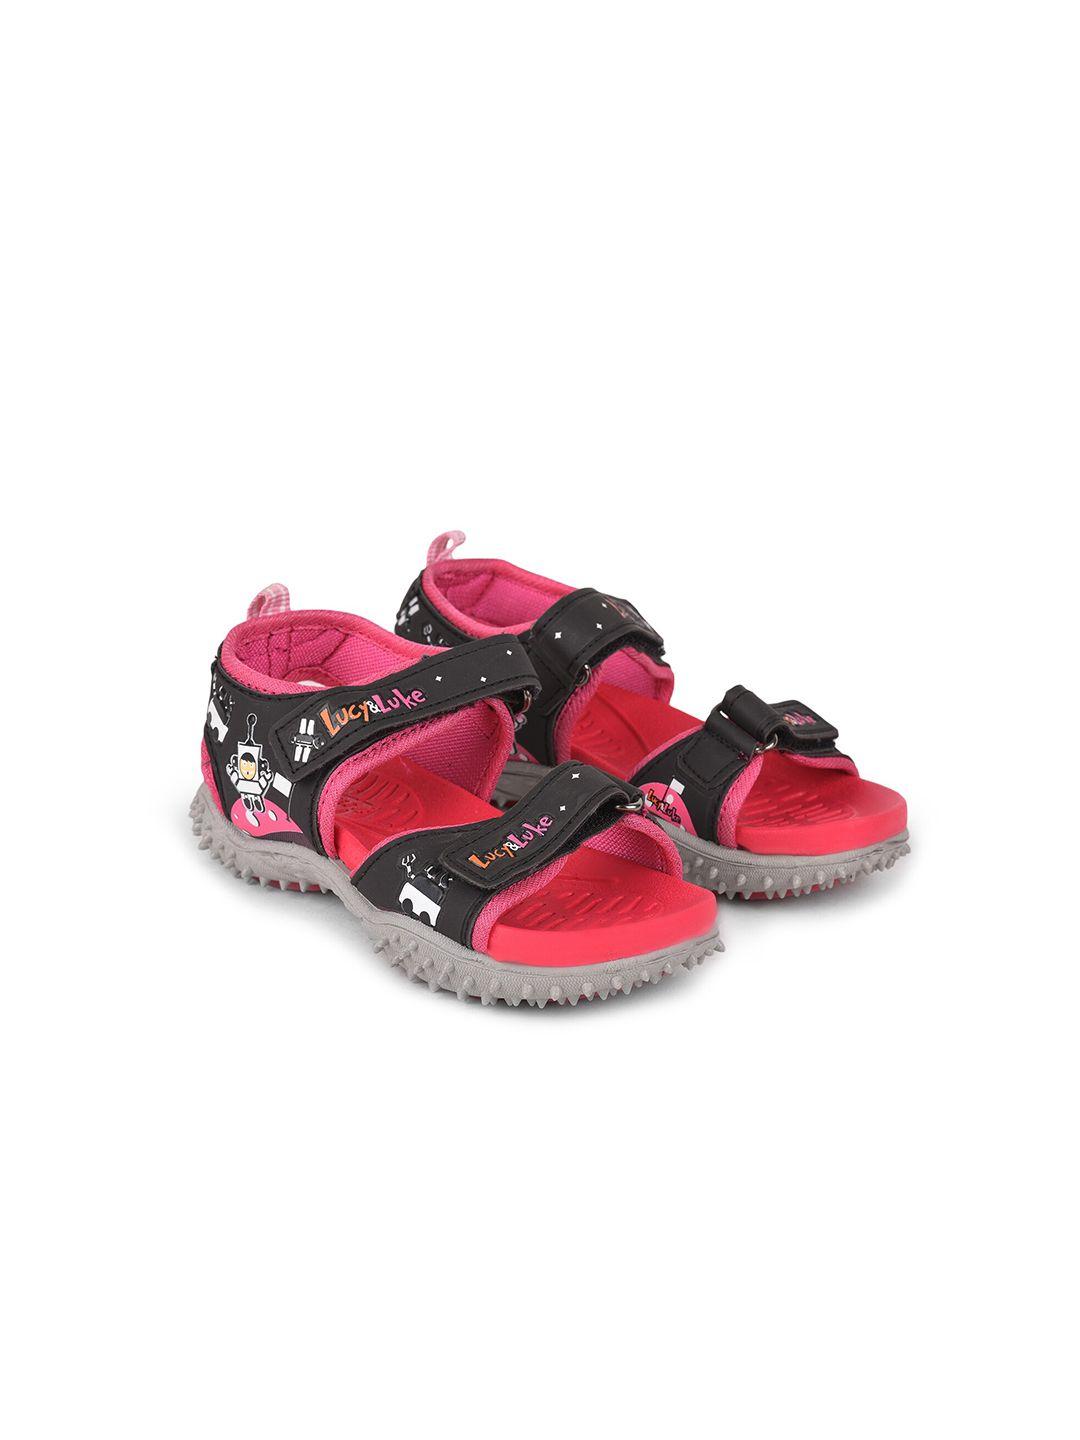 liberty kids pink & black printed sports sandals